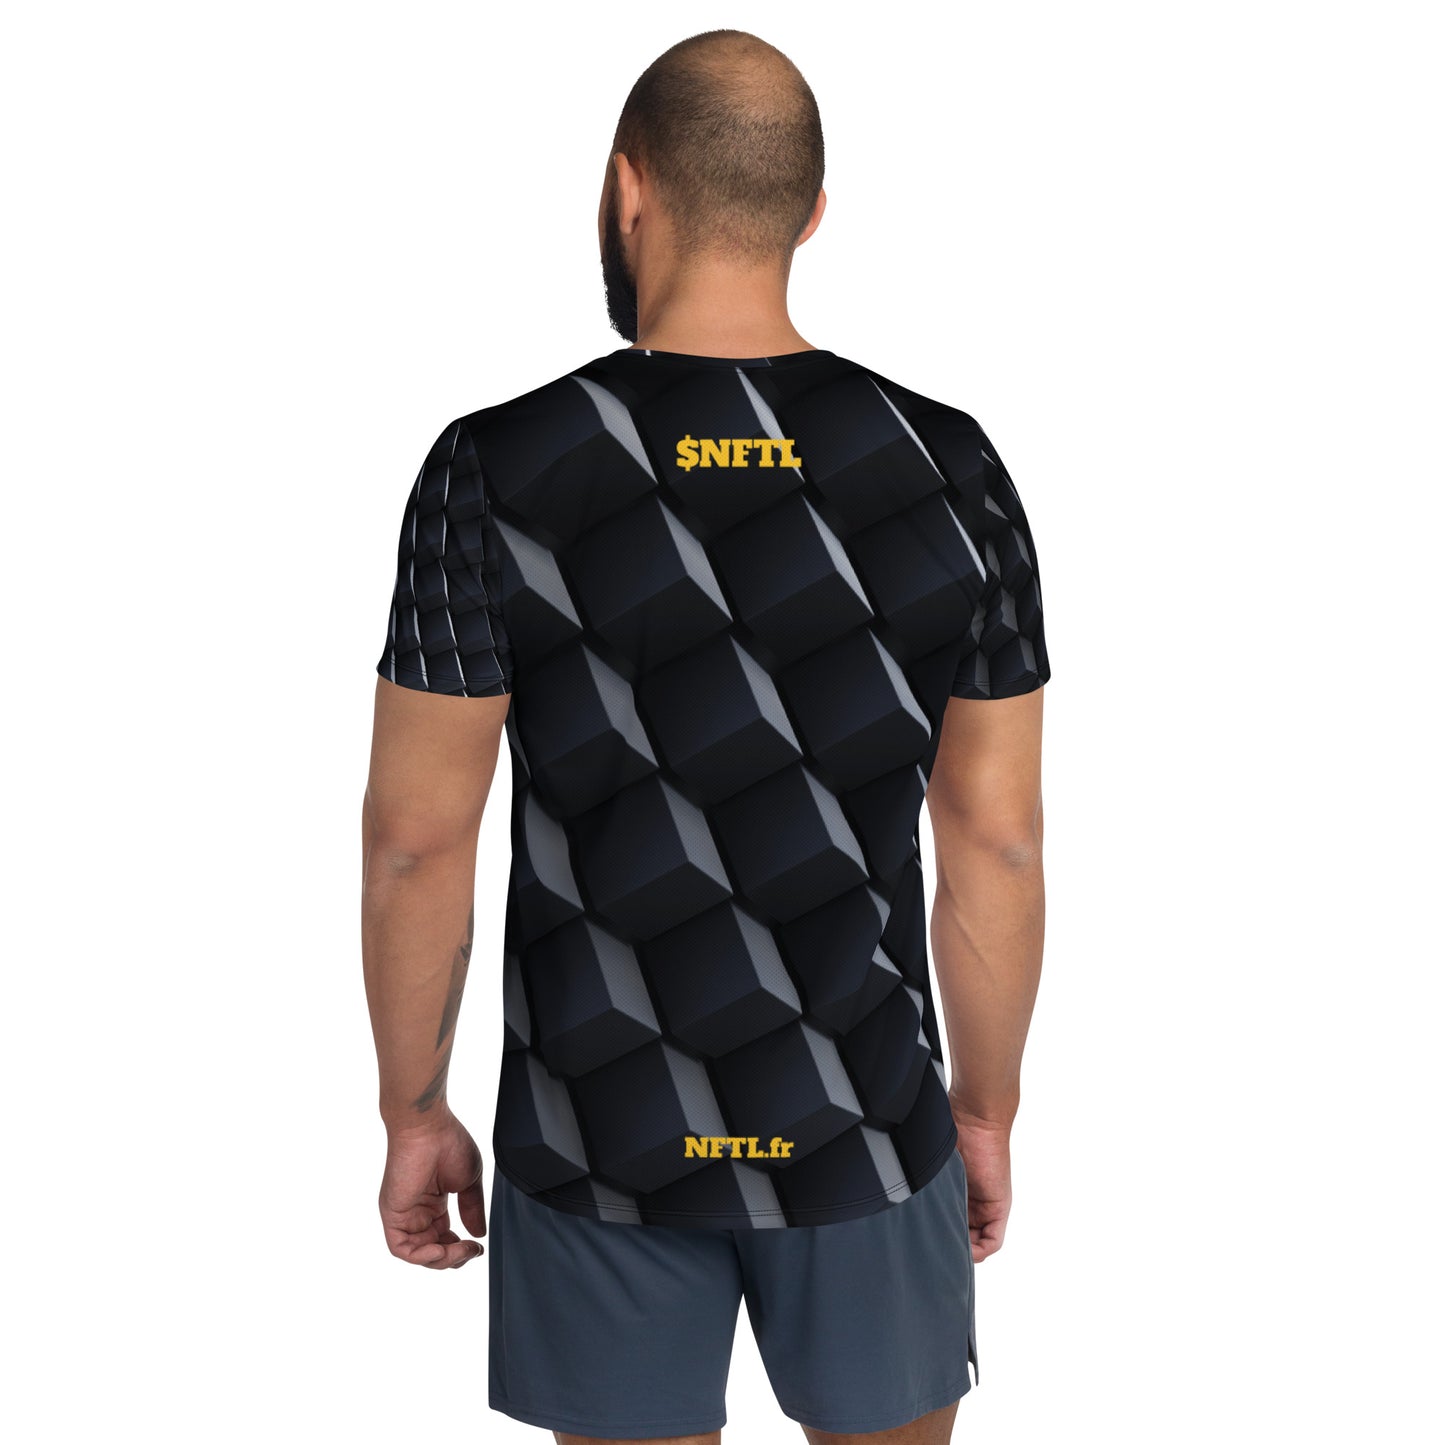 Men's Athletic T-shirt $NFTL REVOLUTION